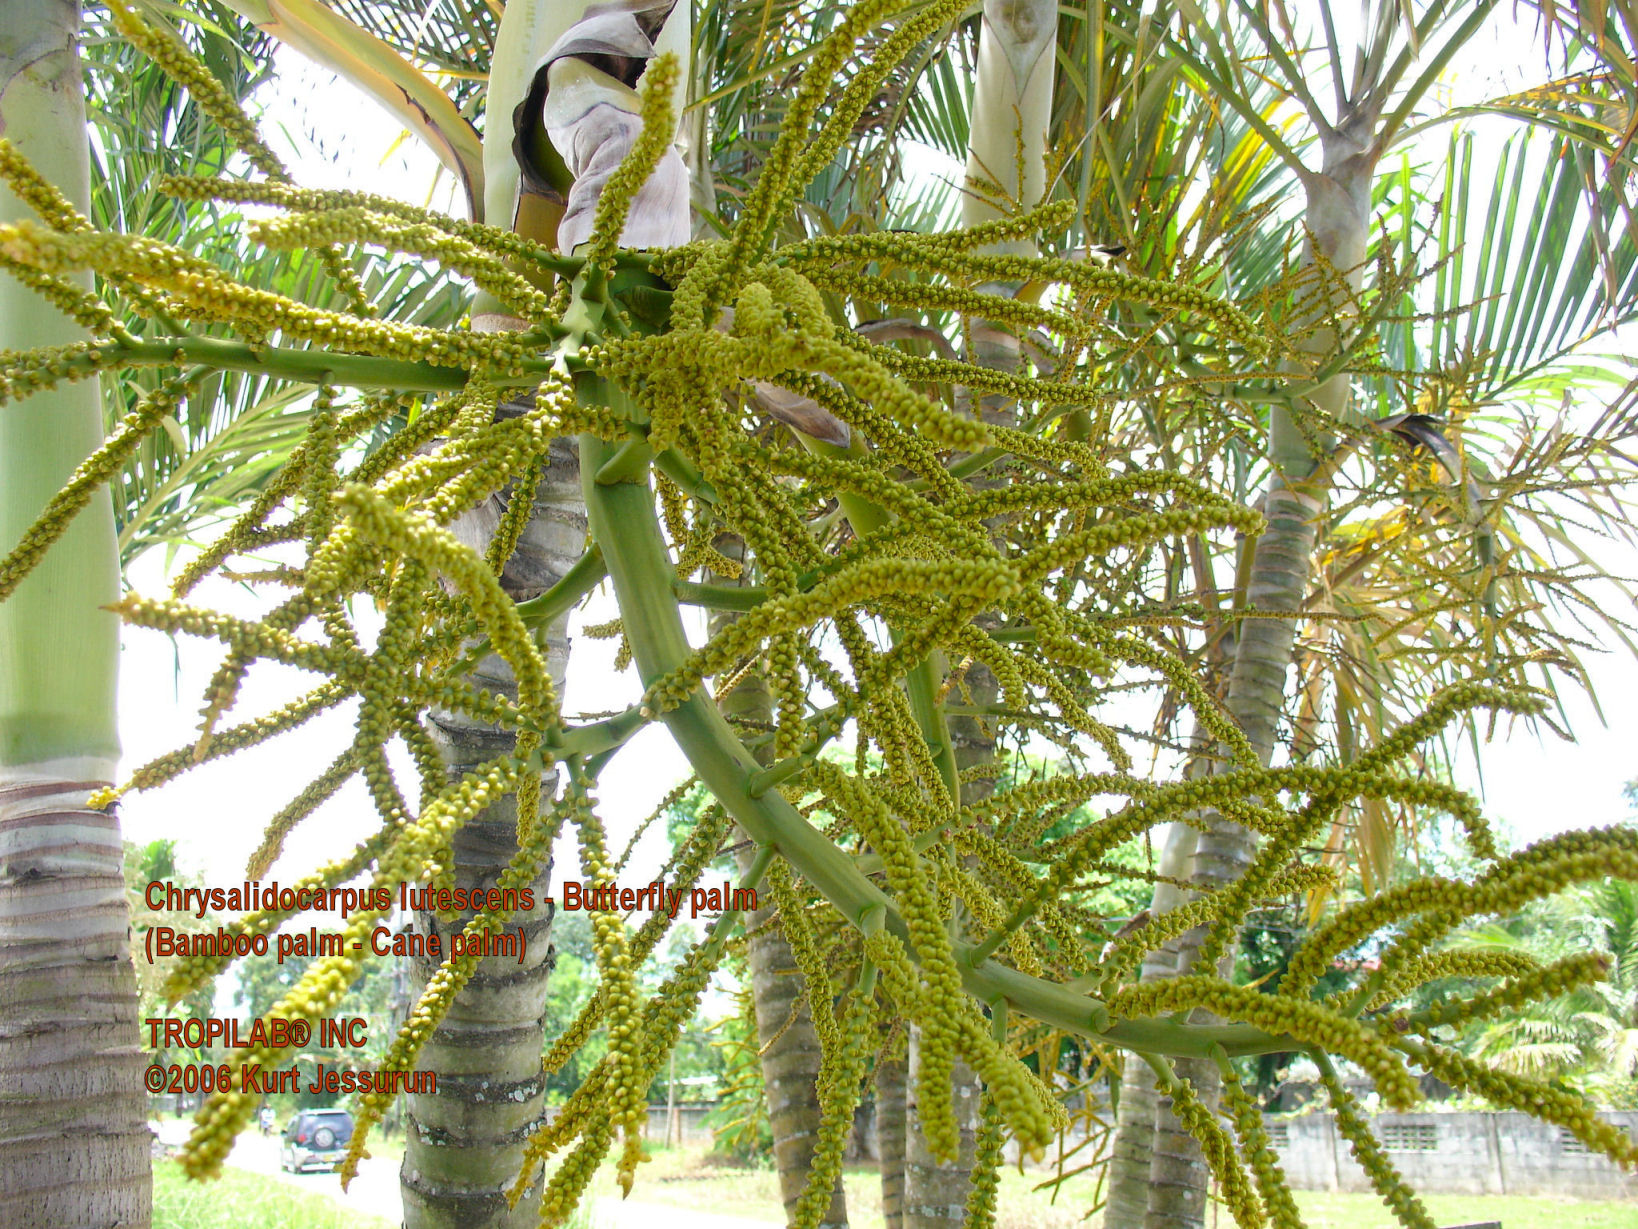 Chrysalidocarpus lutescens - Butterfly palm